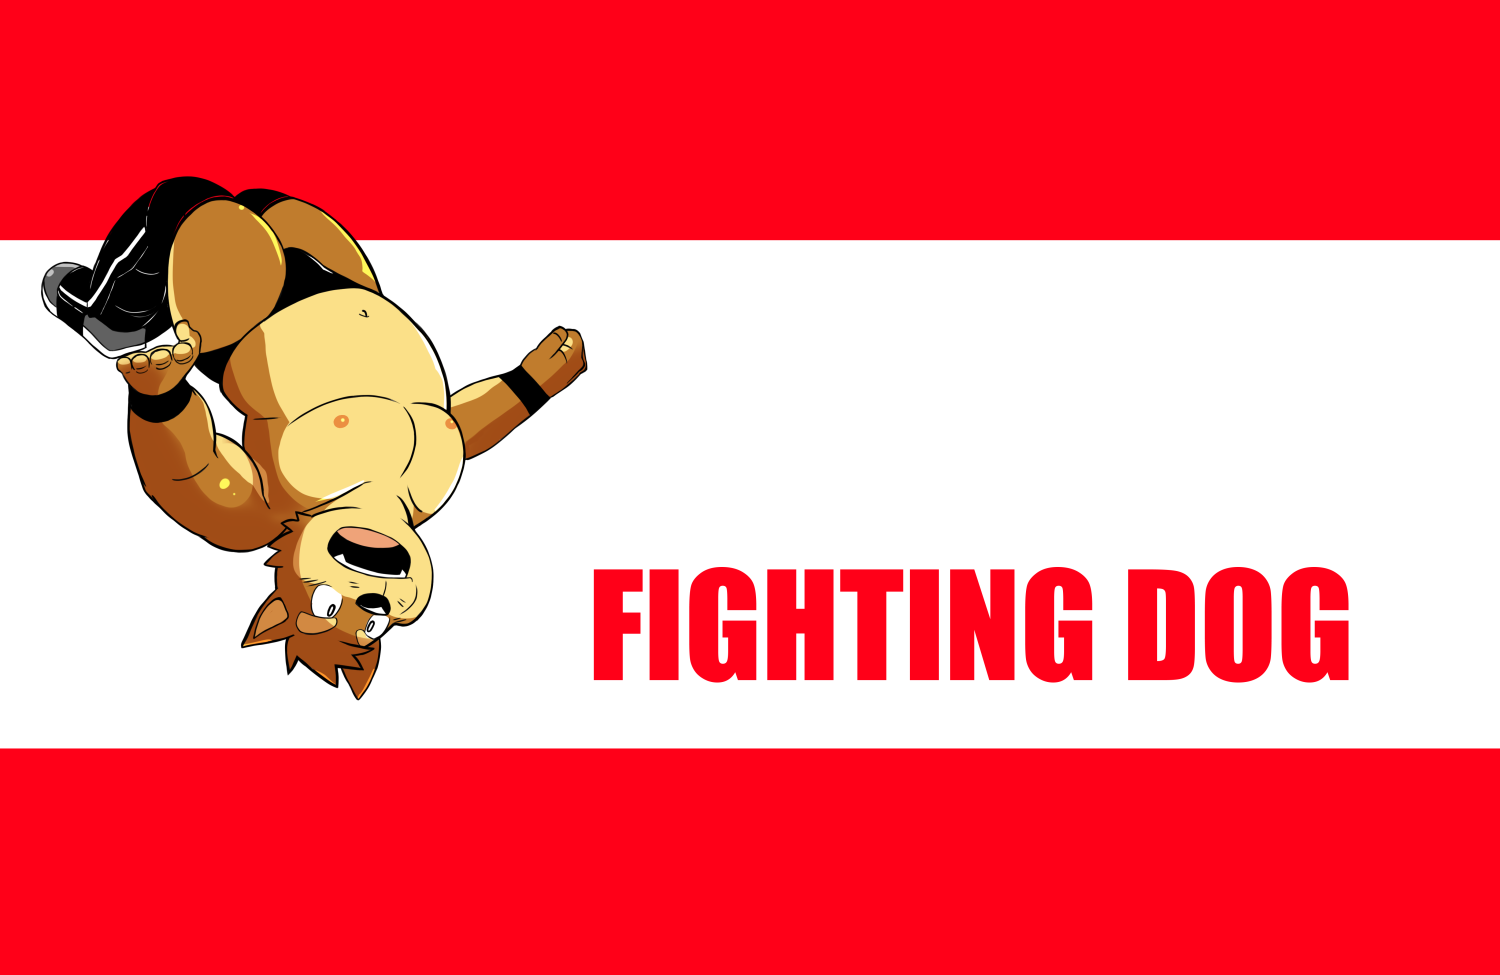 FIGHTING DOG